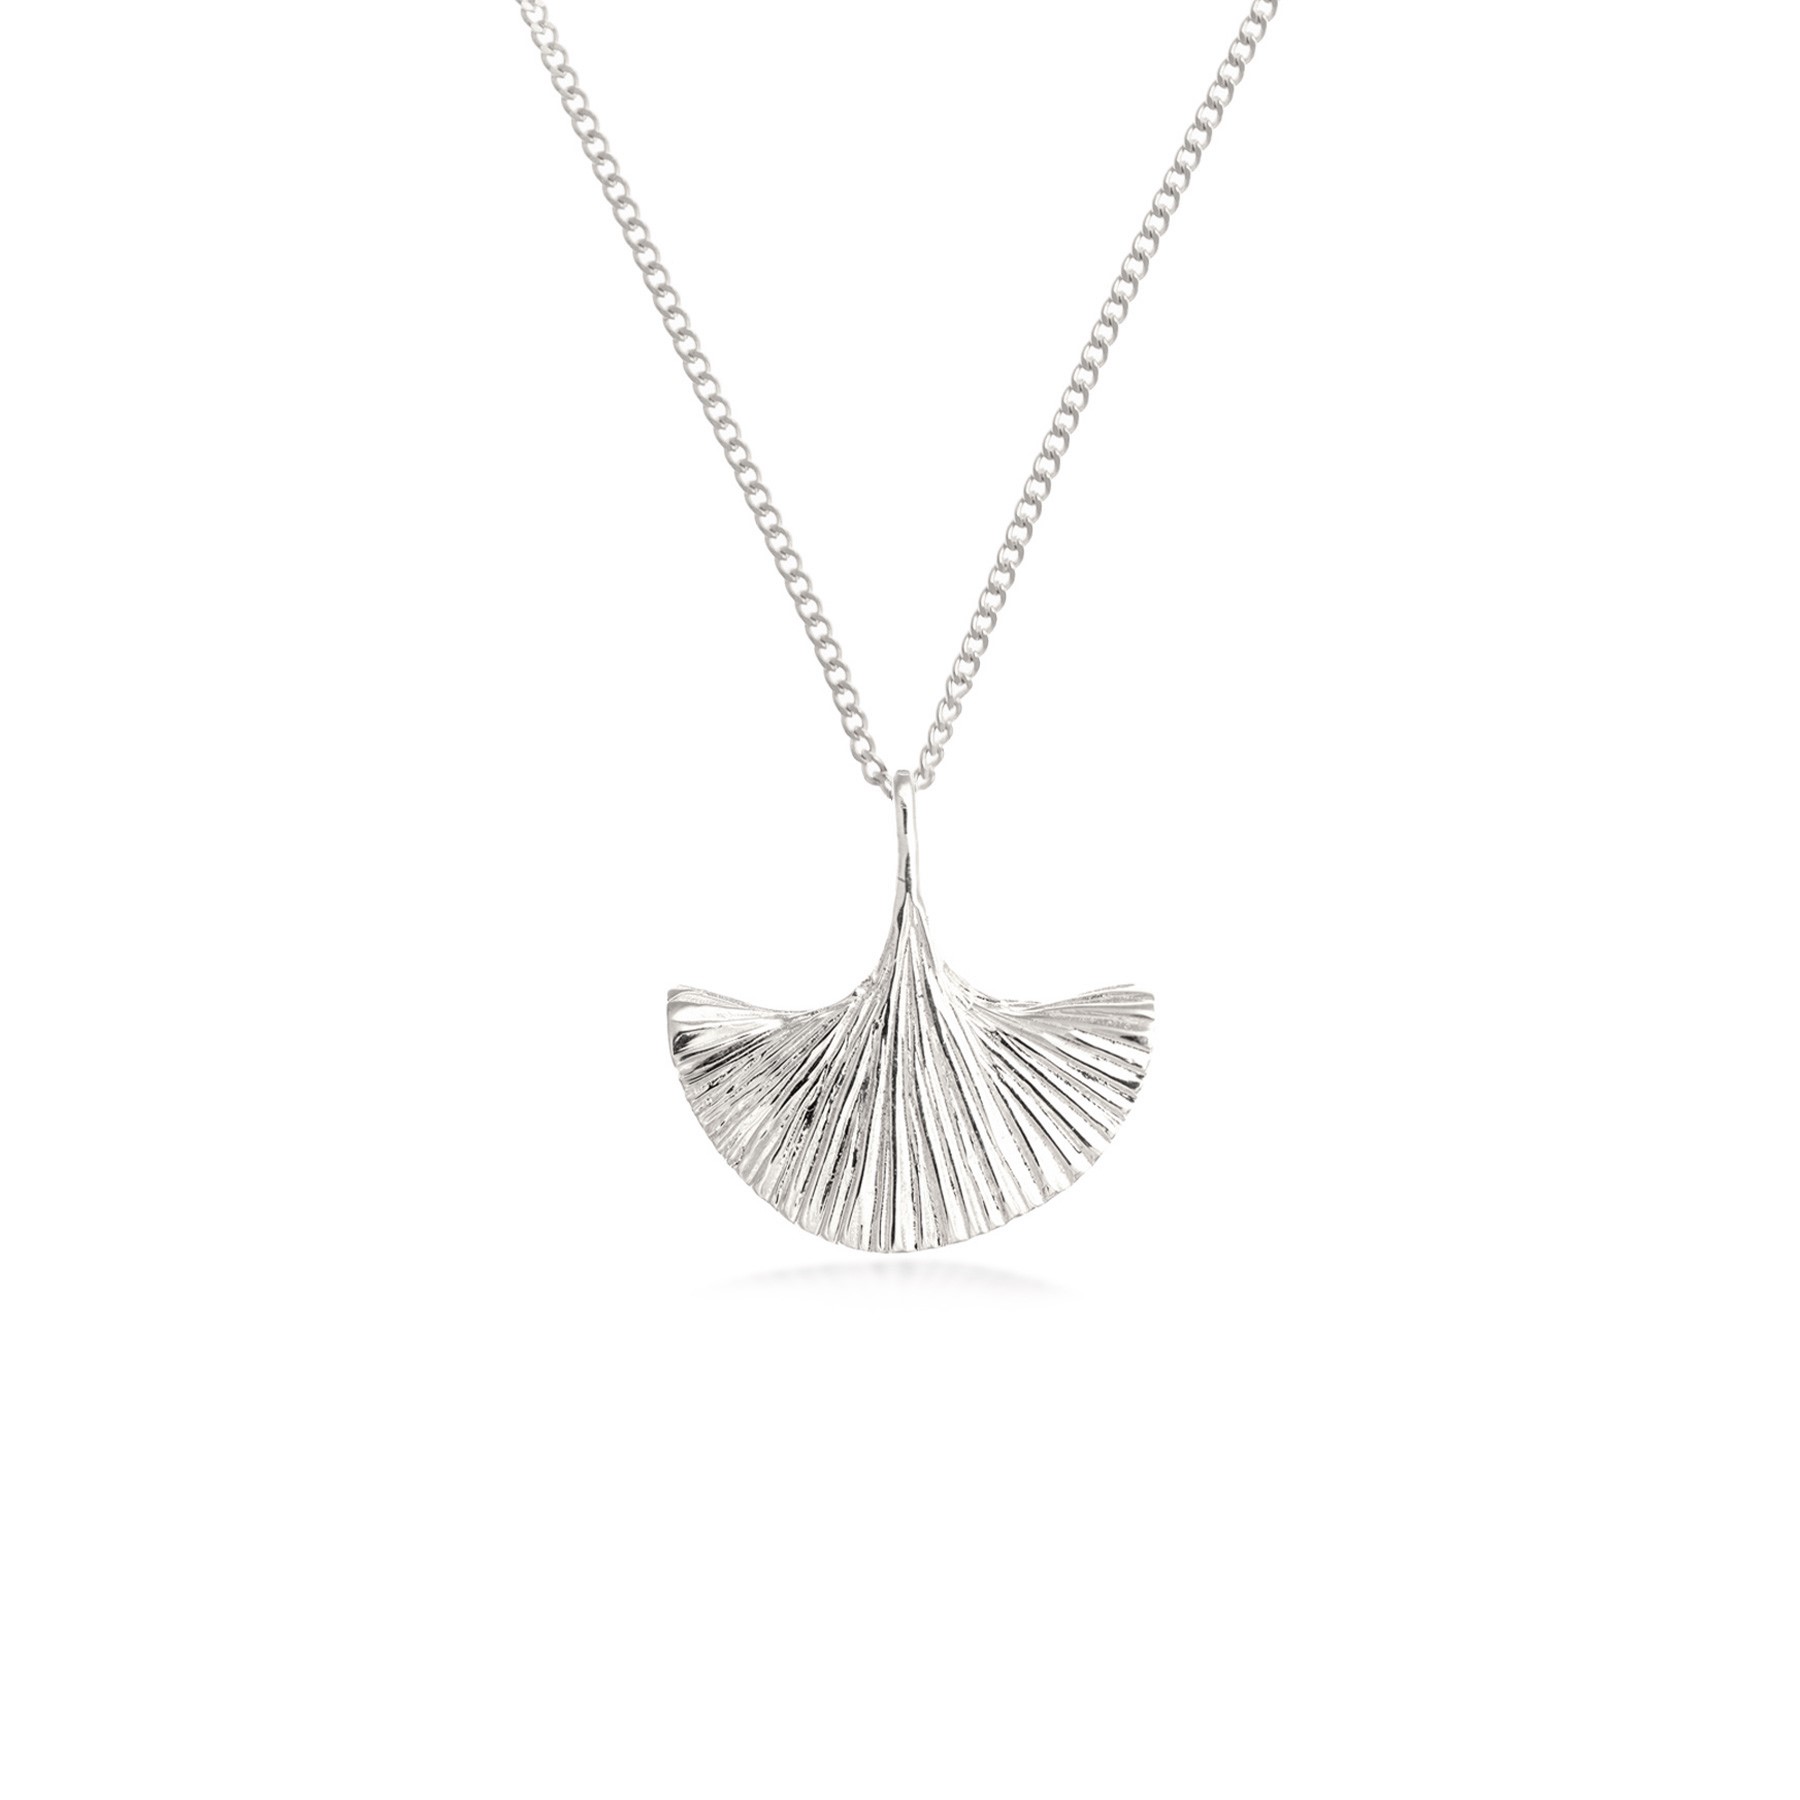 Carmen silver necklace